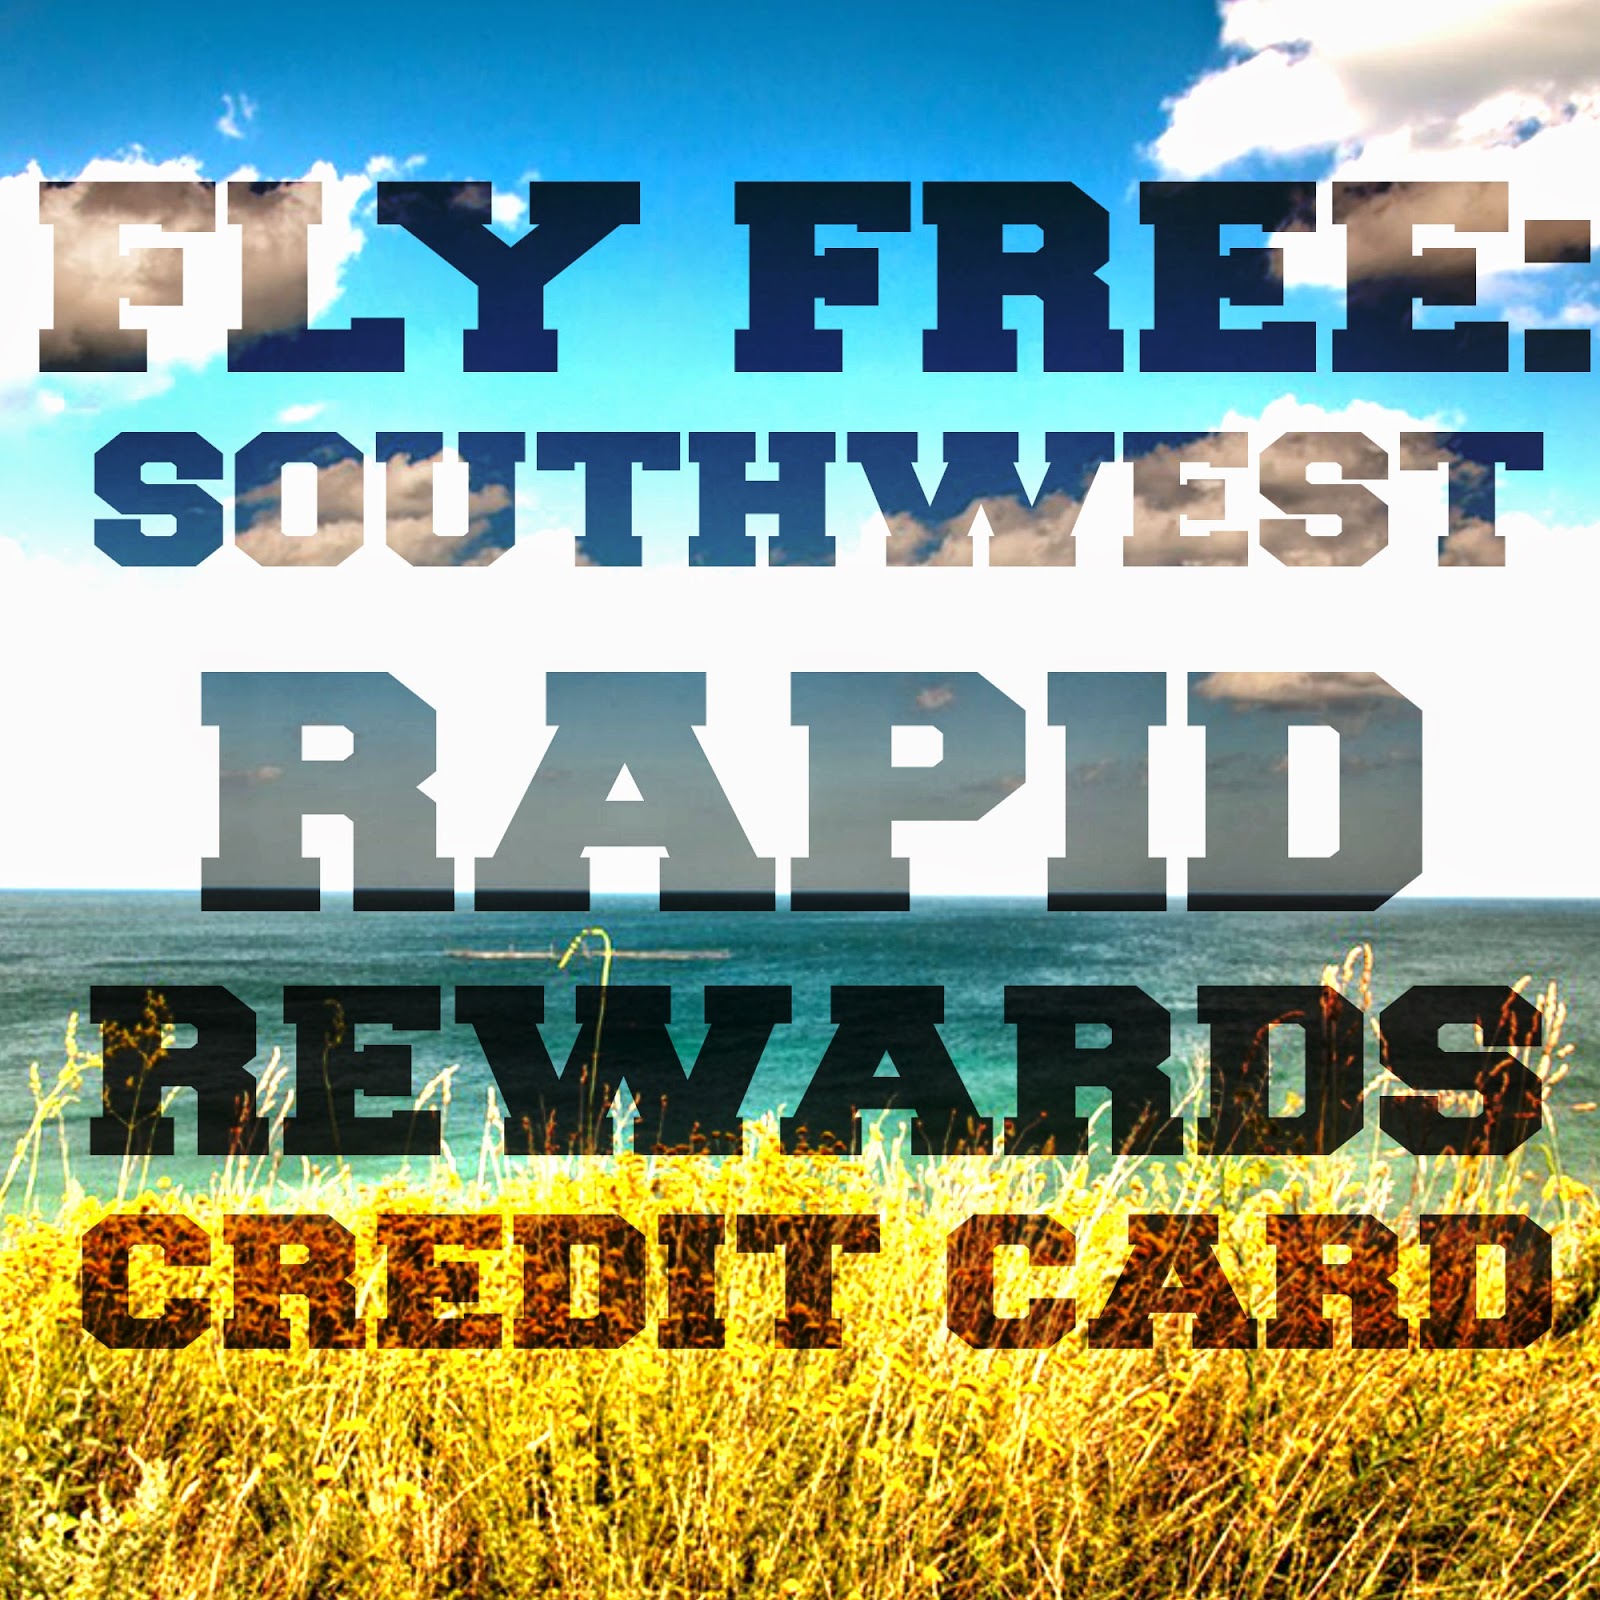 Southwest Rapid Rewards Card